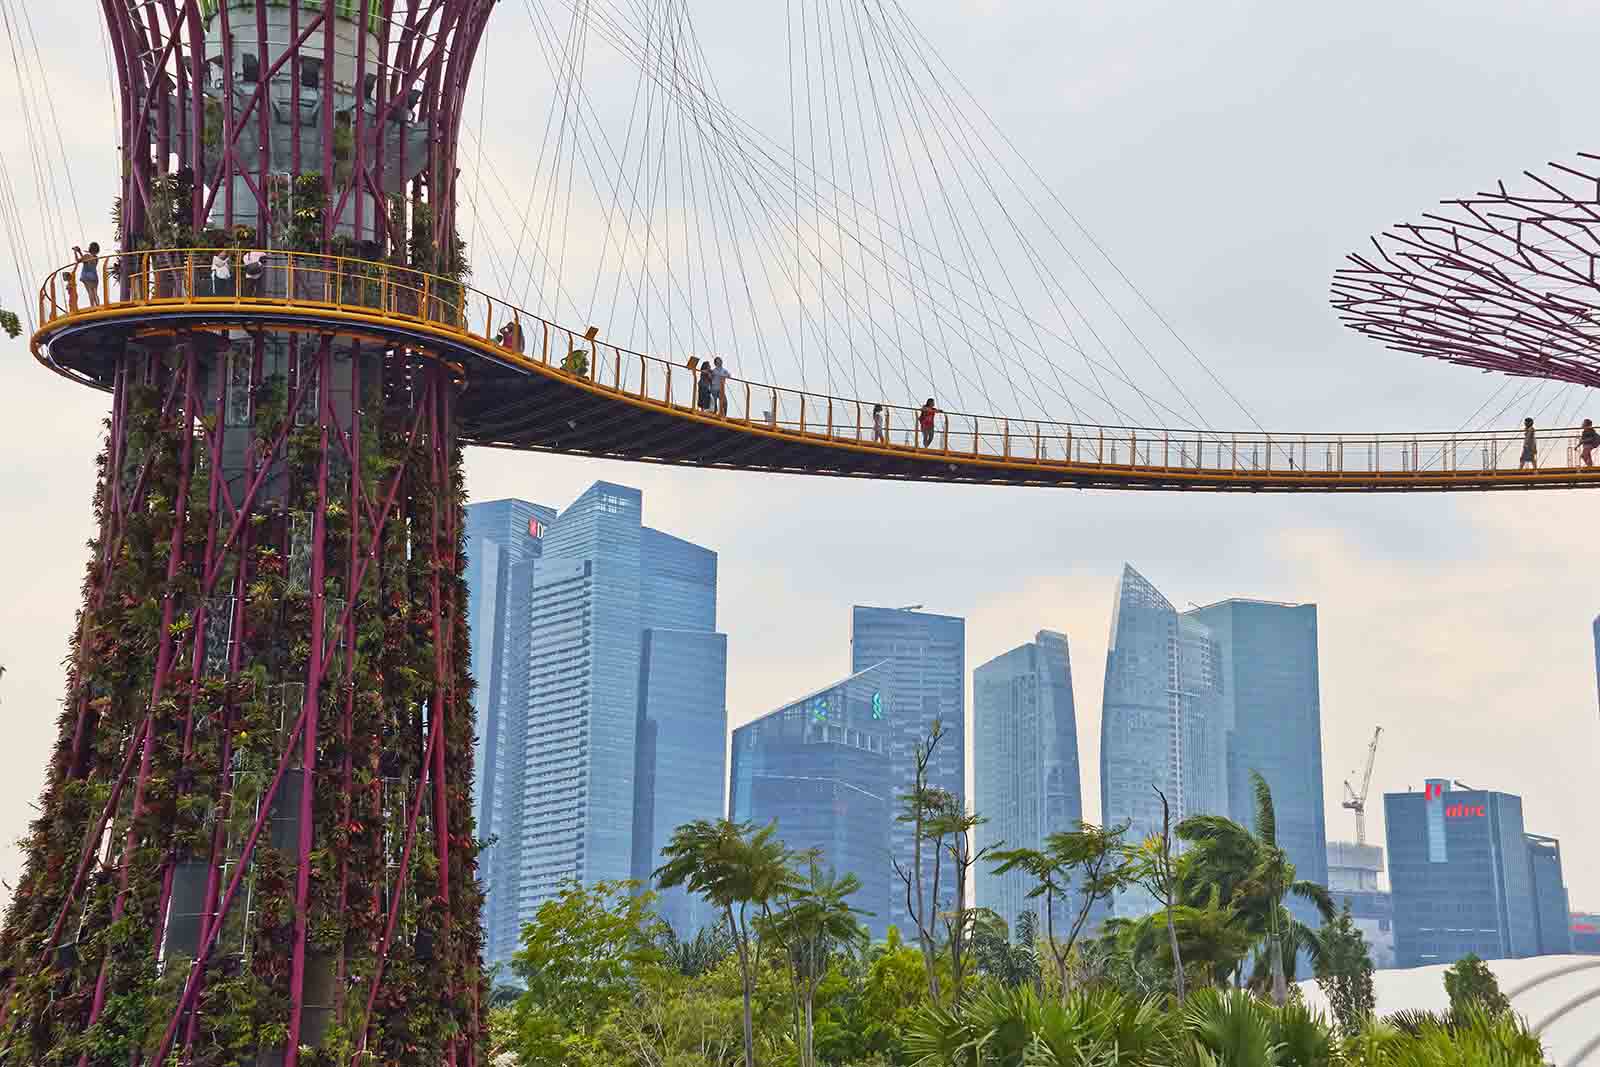 Gardens by the Bay Footbridge, Singapore | Top reasons to visit Singapore